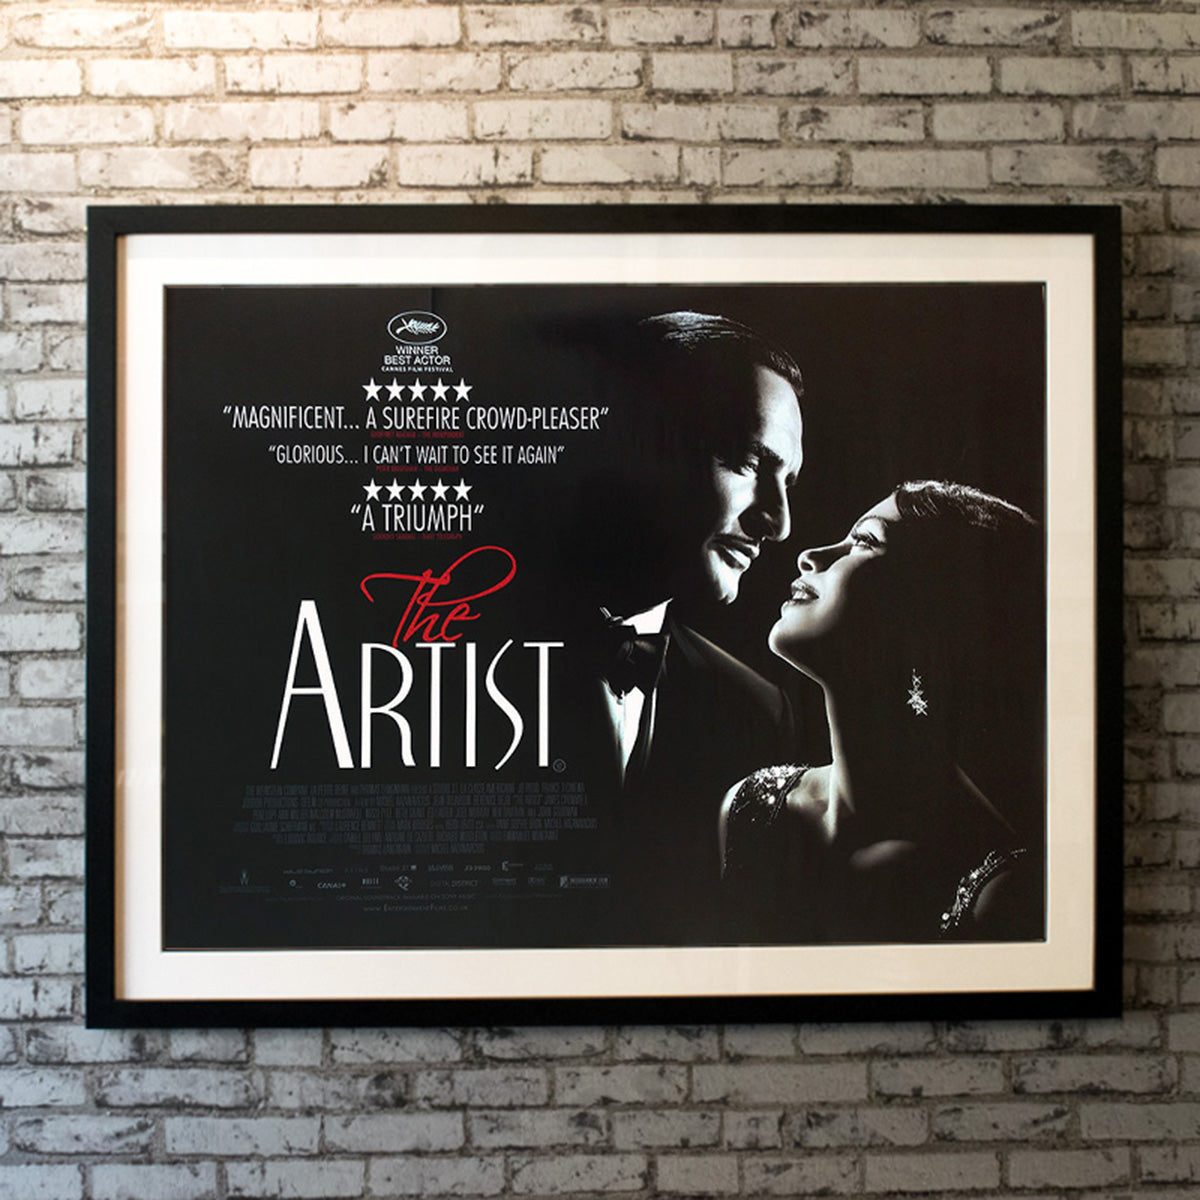 Original Movie Poster of Artist, The (2011)